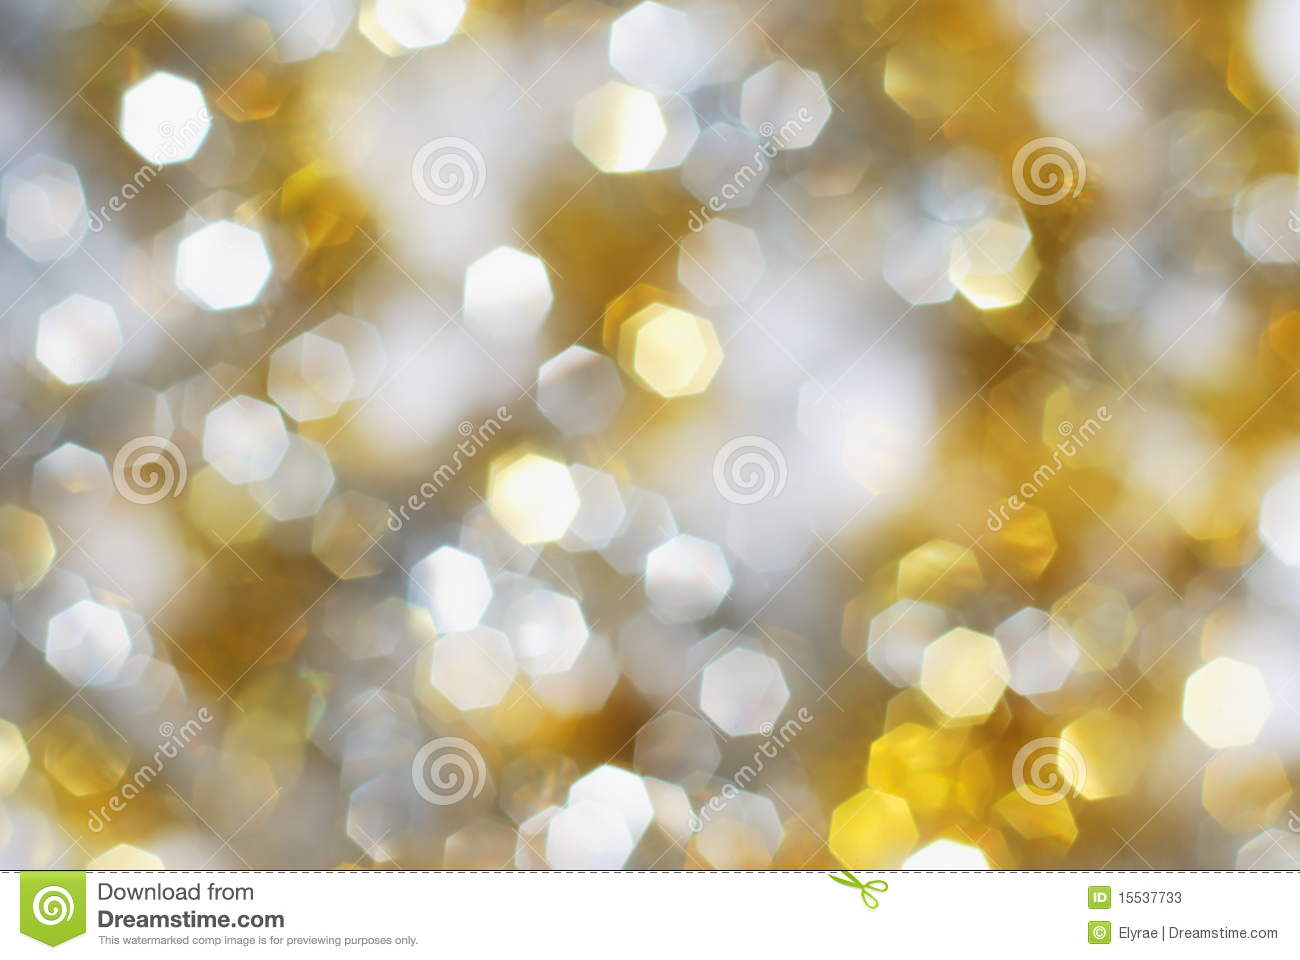 Silver and Gold Wallpaper - WallpaperSafari